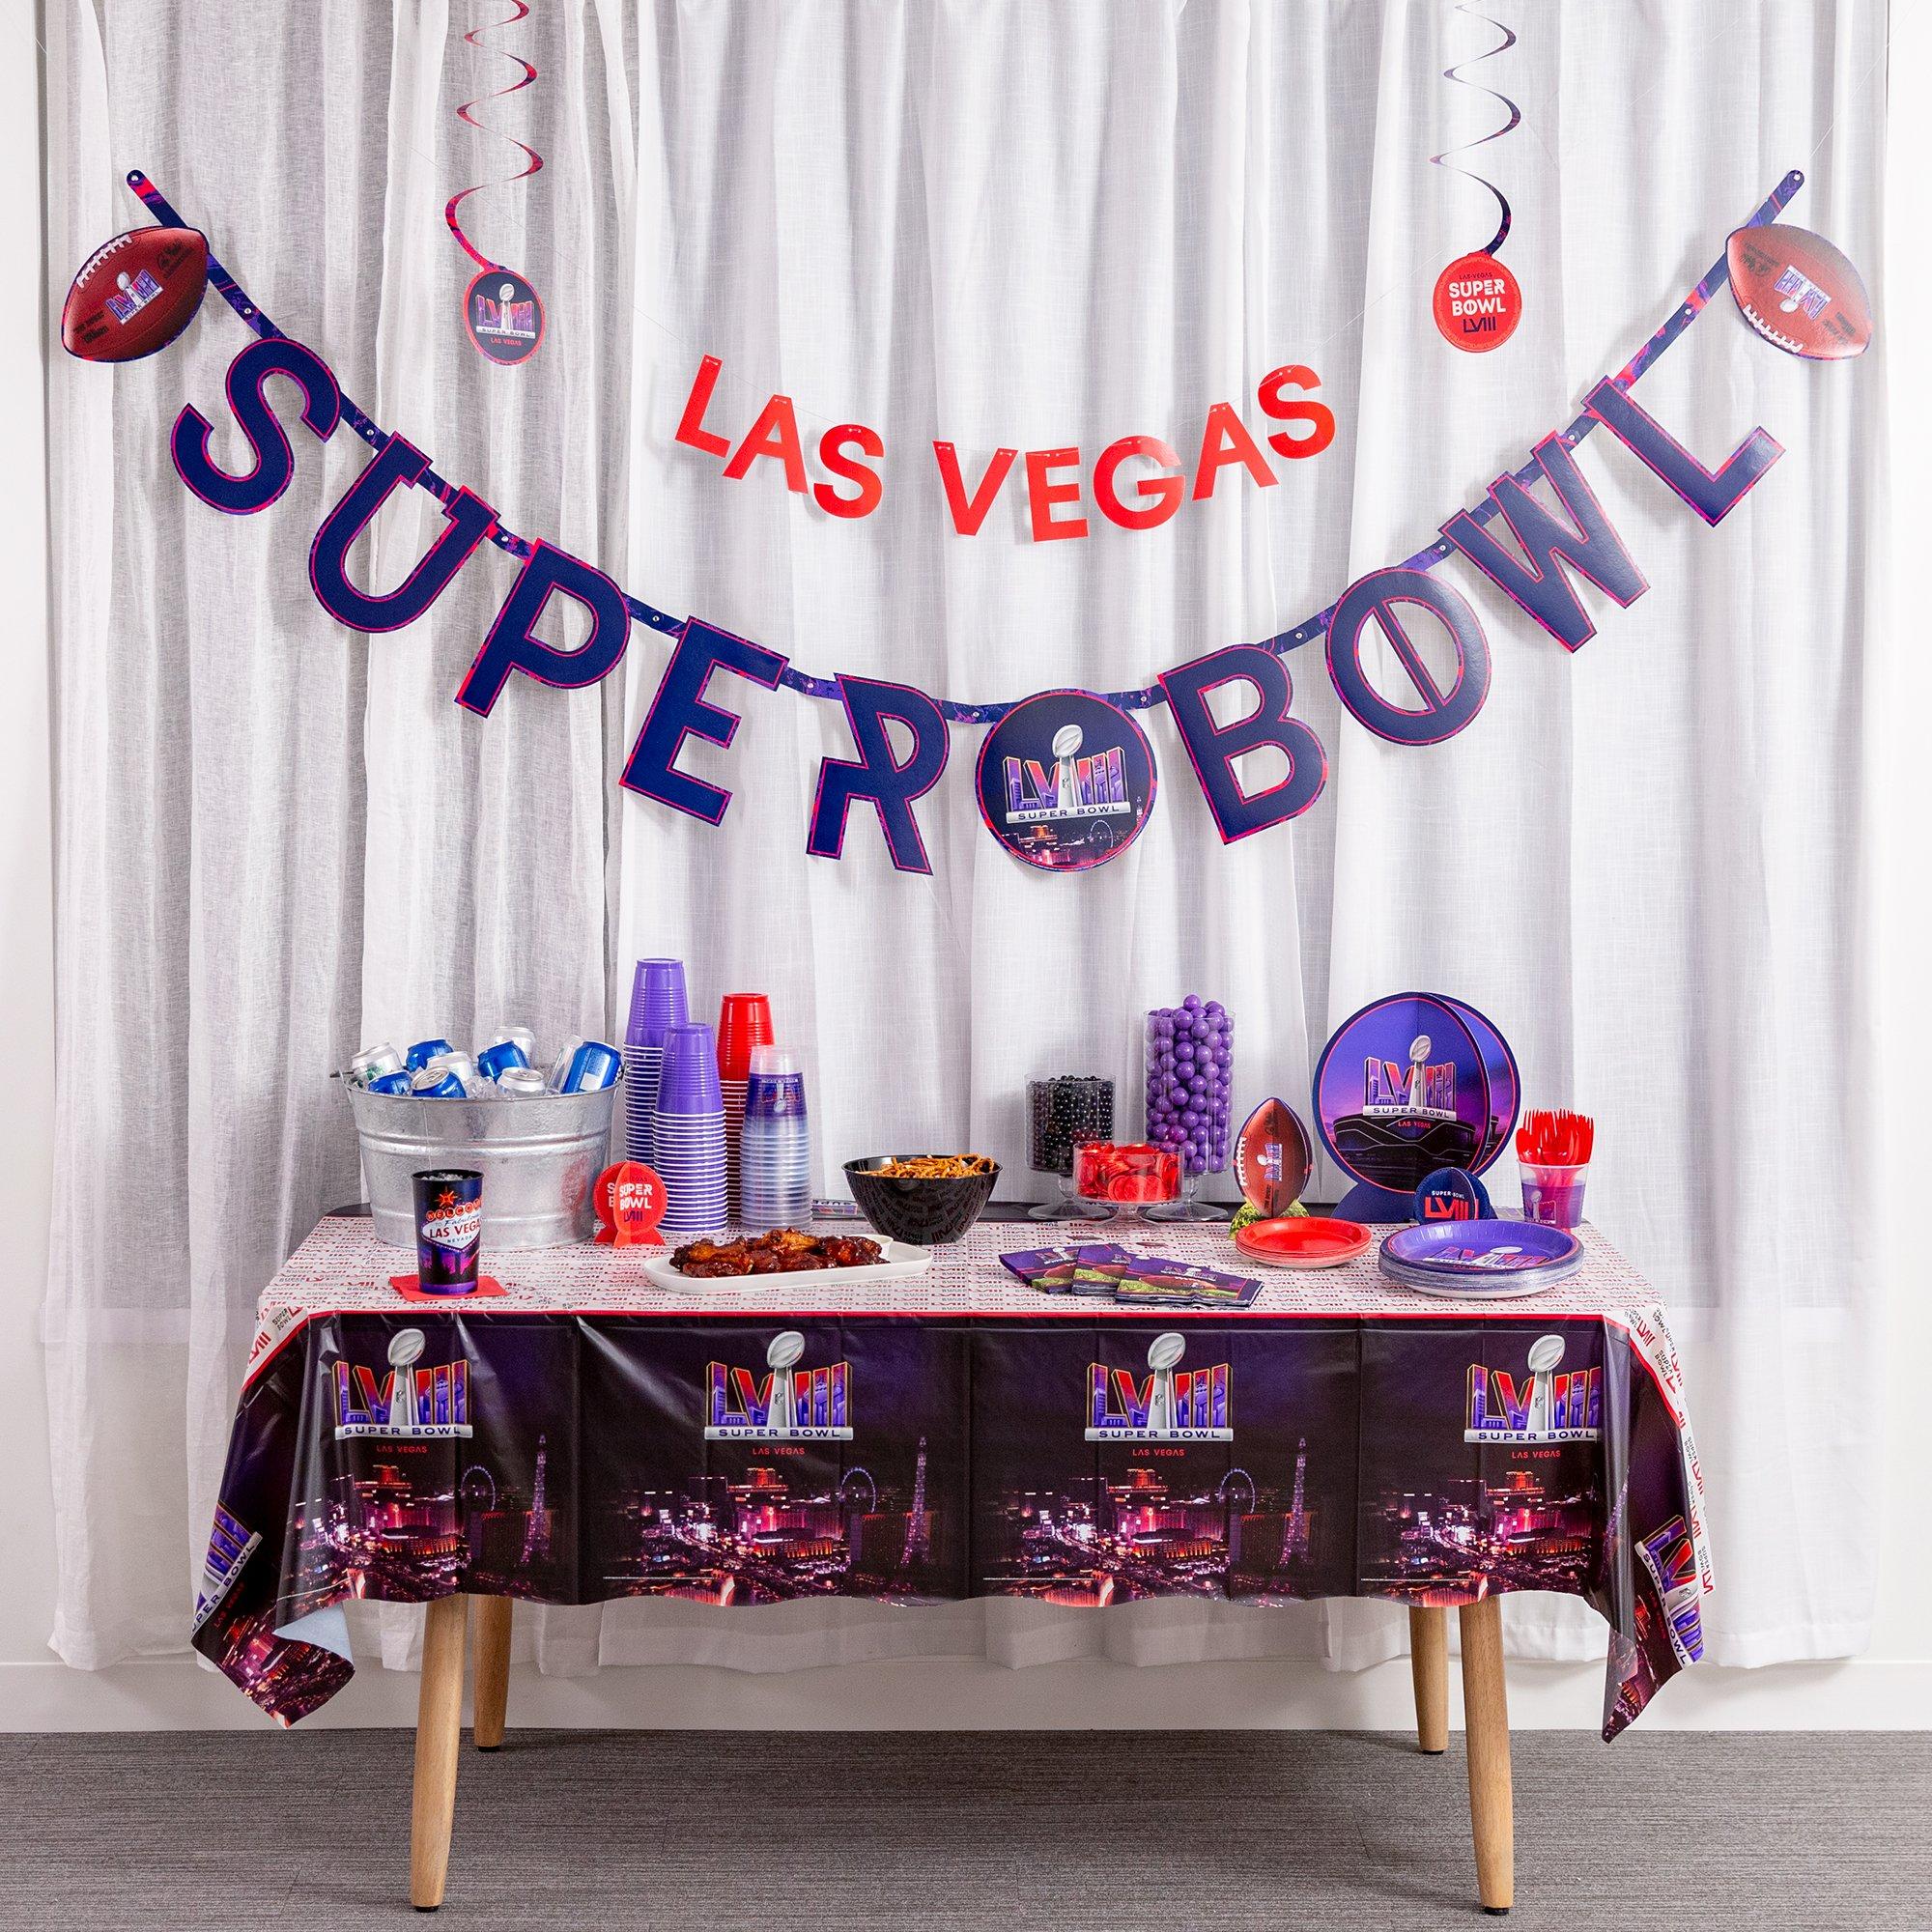 Superbowl Super Bowl LVII Football Cake Topper Decoration Layon 